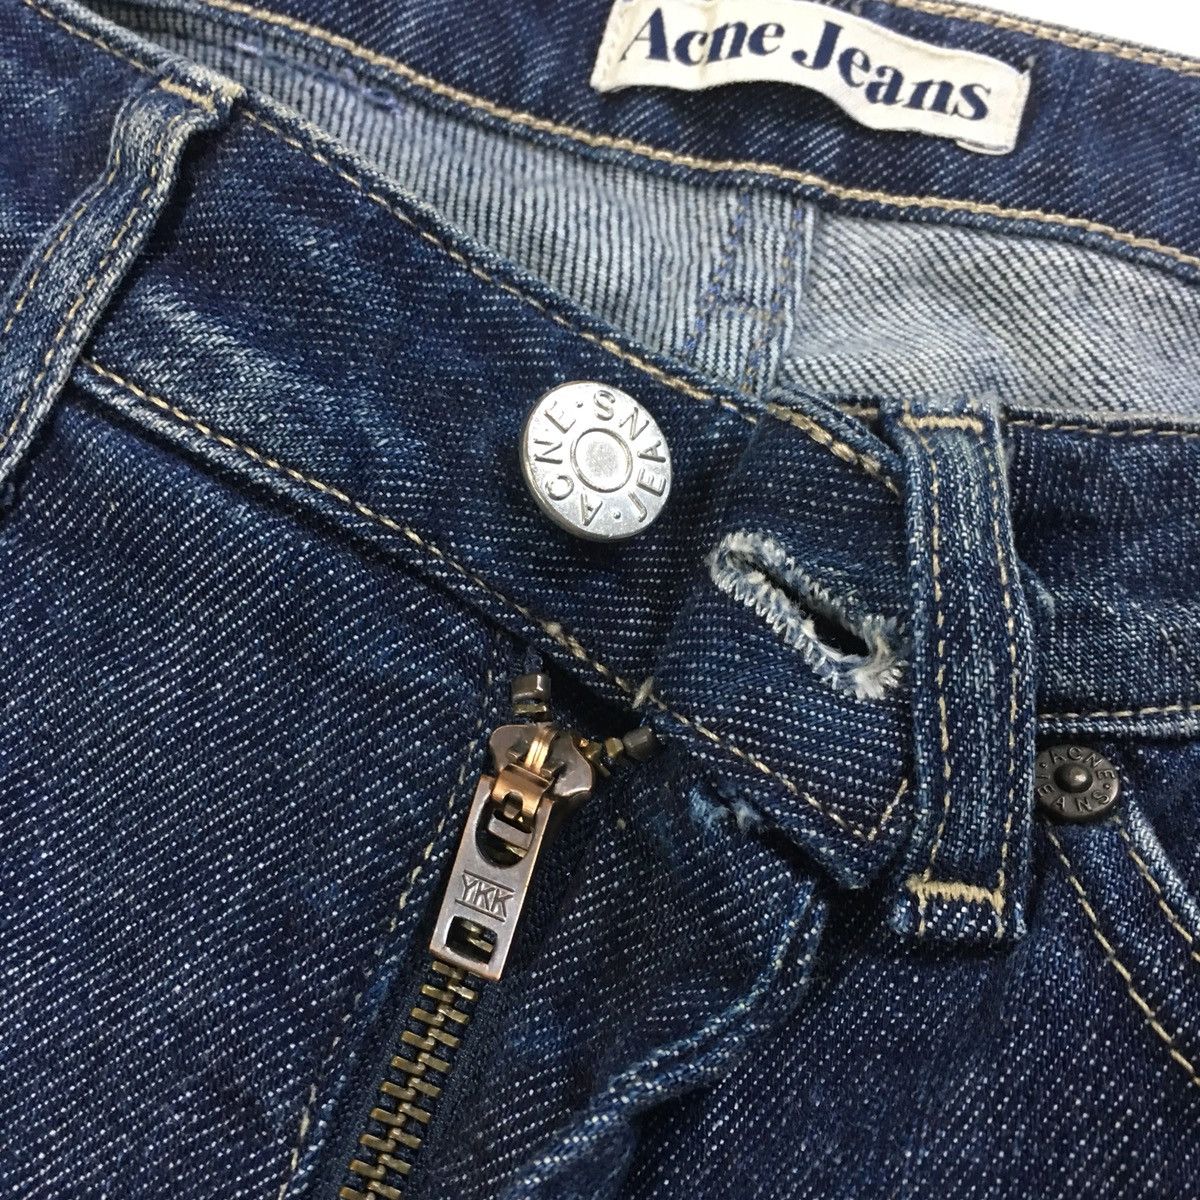 Acne Jeans Slim Fit Pant - 10